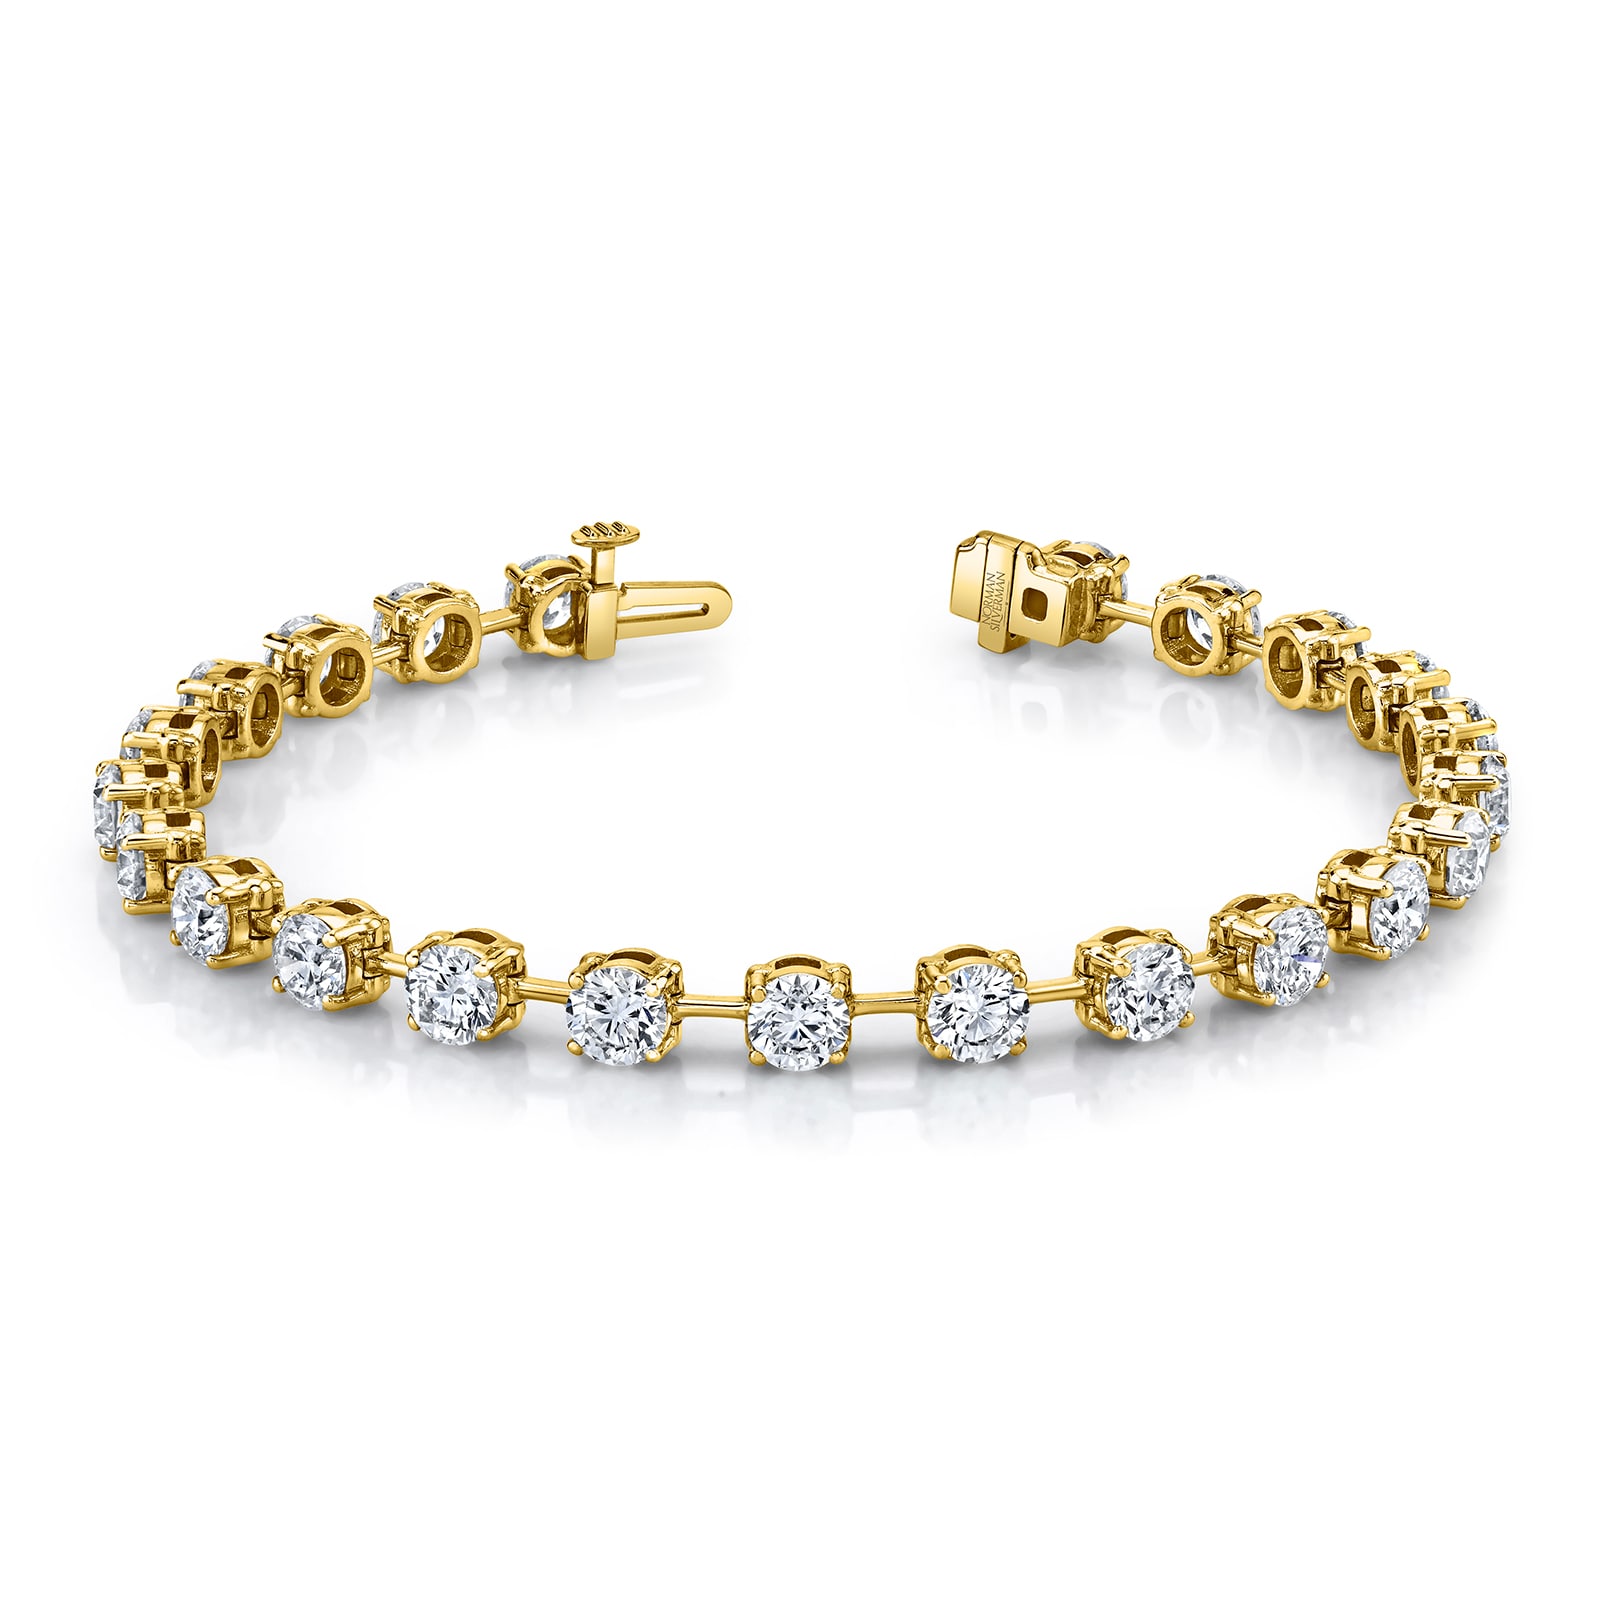 18k Yellow Gold 5.15cttw Brilliant Cut Diamond Bracelet